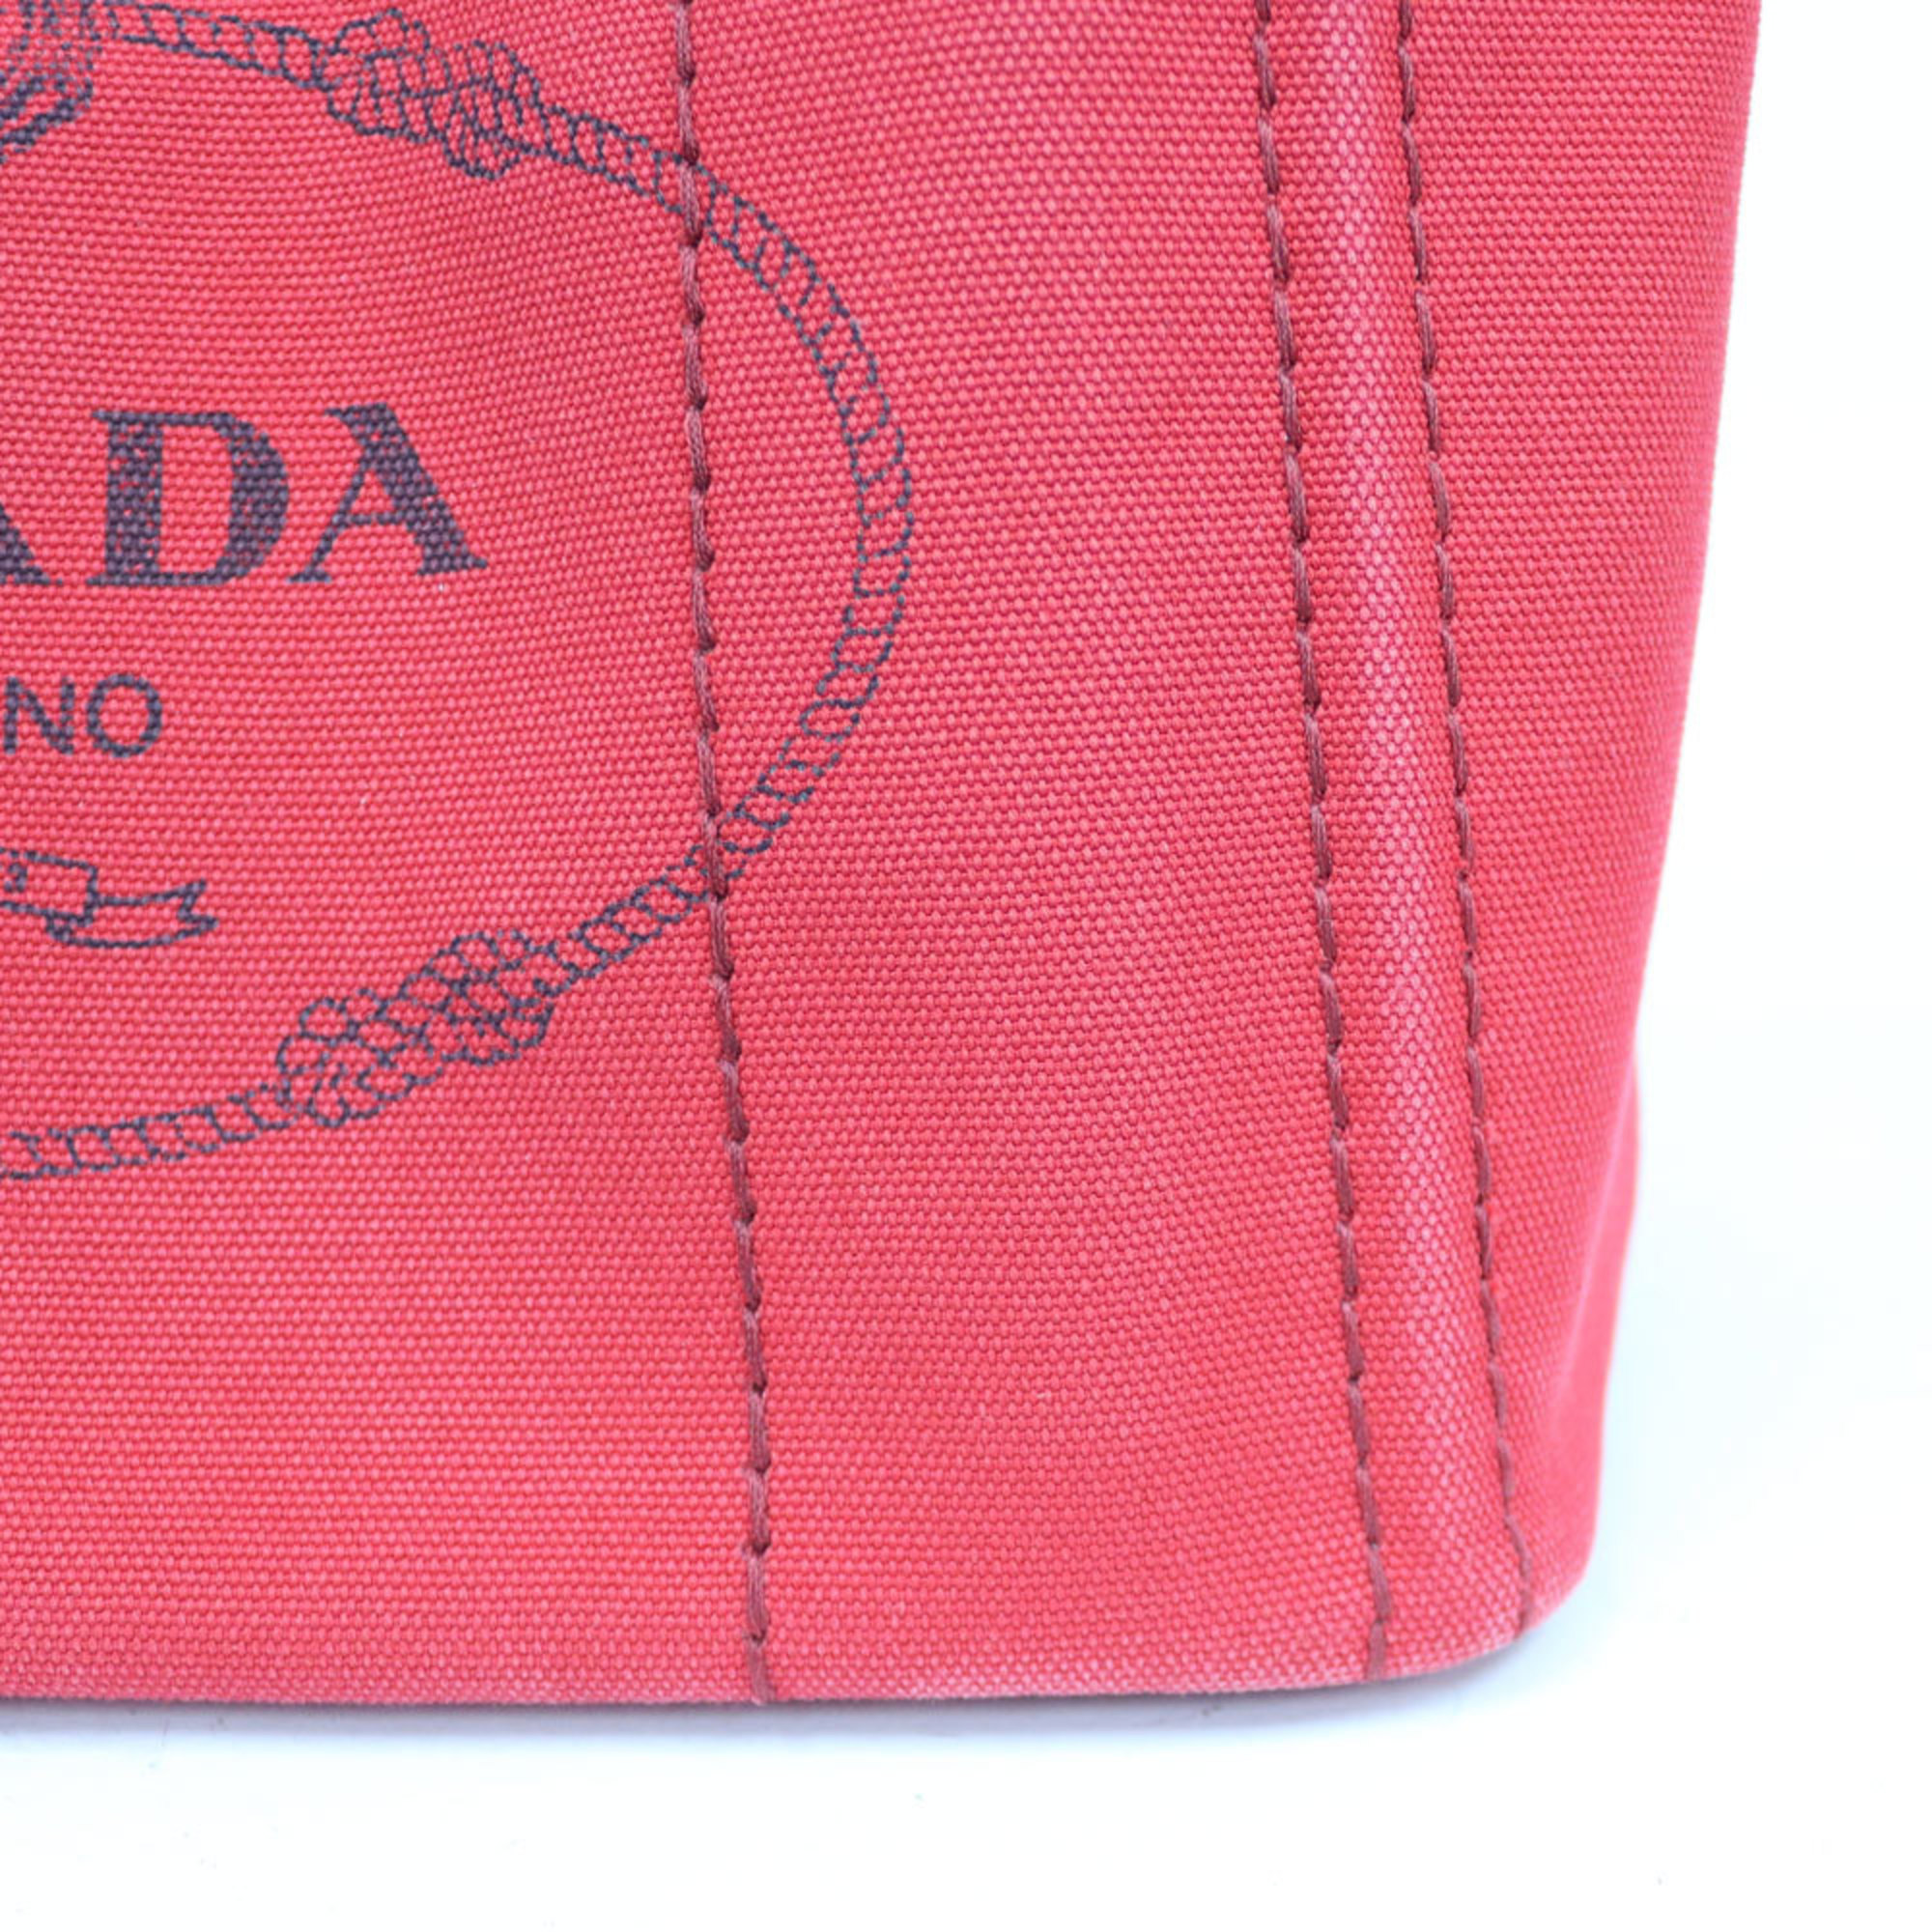 Prada Canapa Tote Mini Shoulder Bag Canvas Red Ladies PRADA Handbag